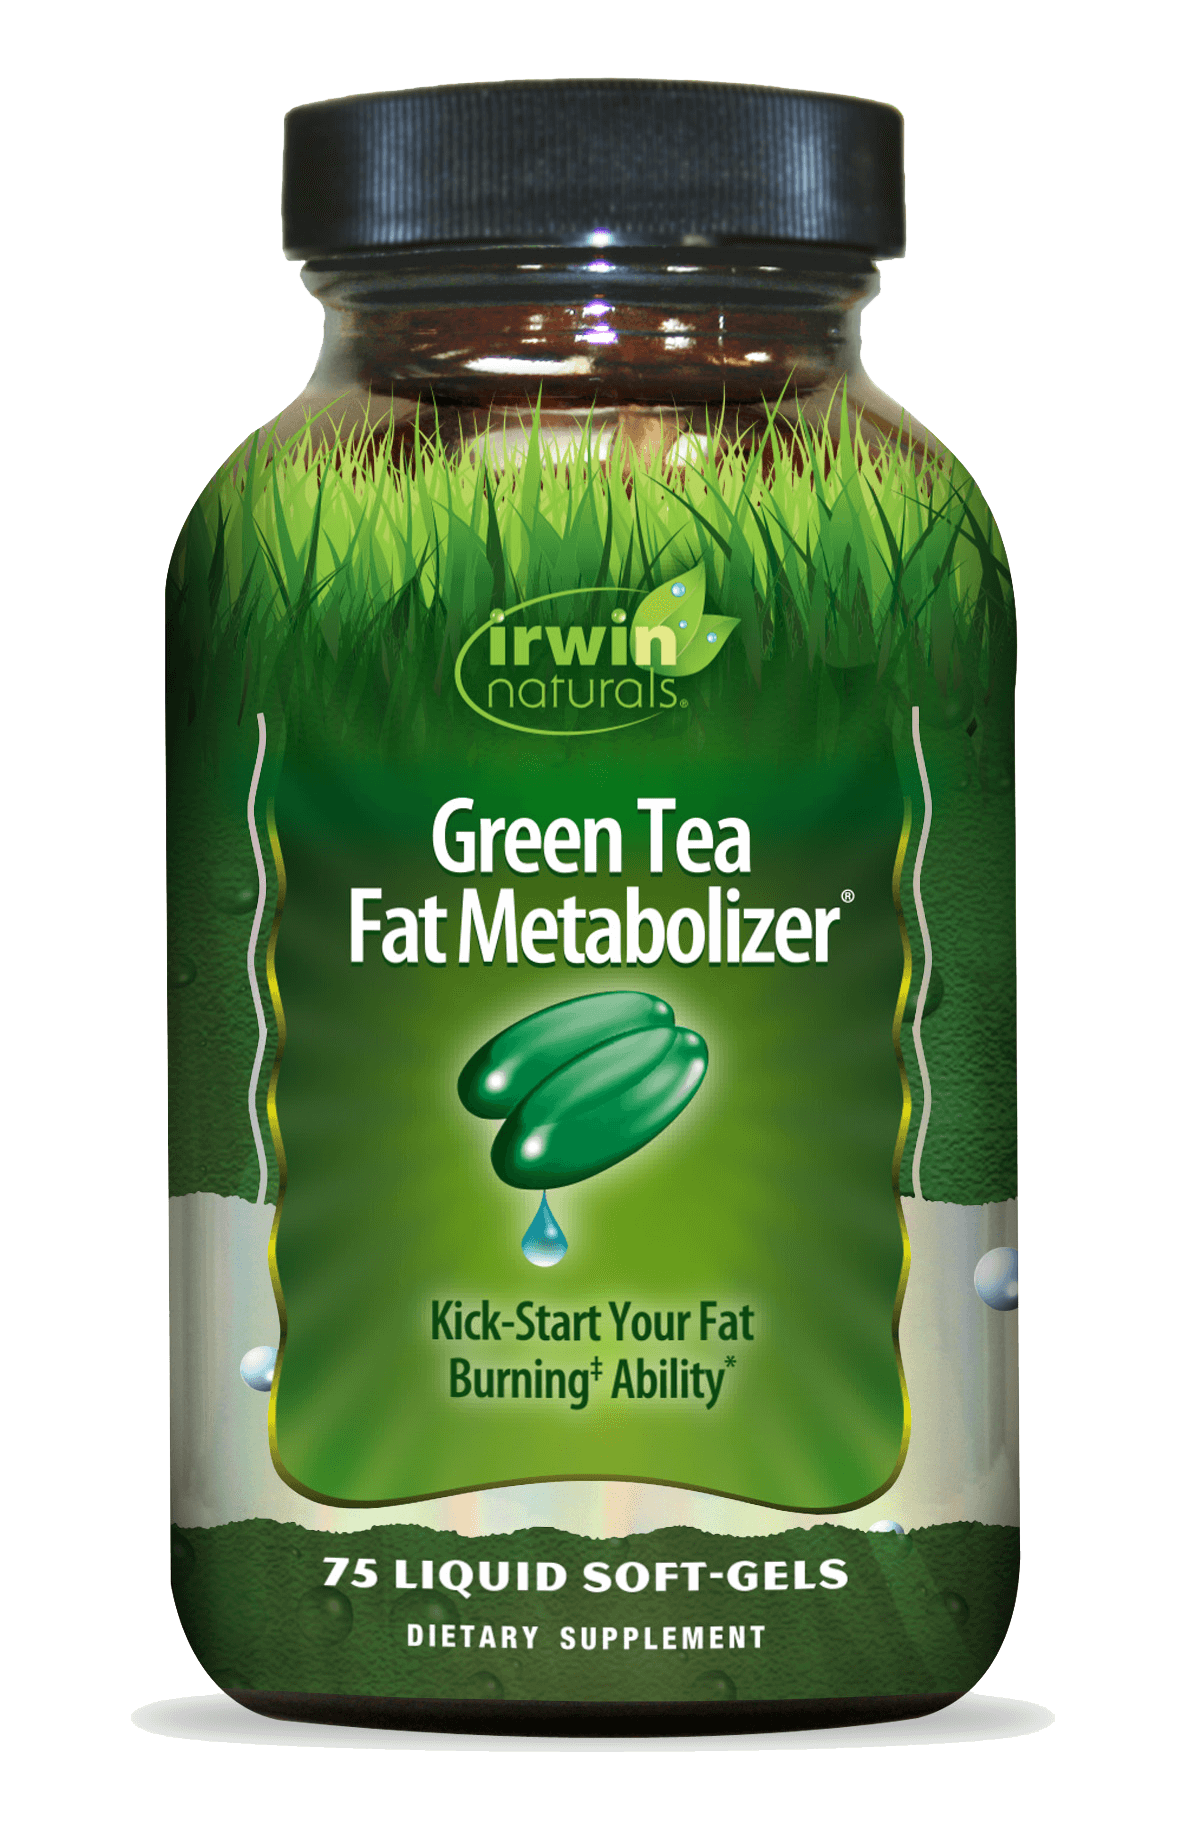 Green Tea Fat Metabolizer by Irwin Naturals